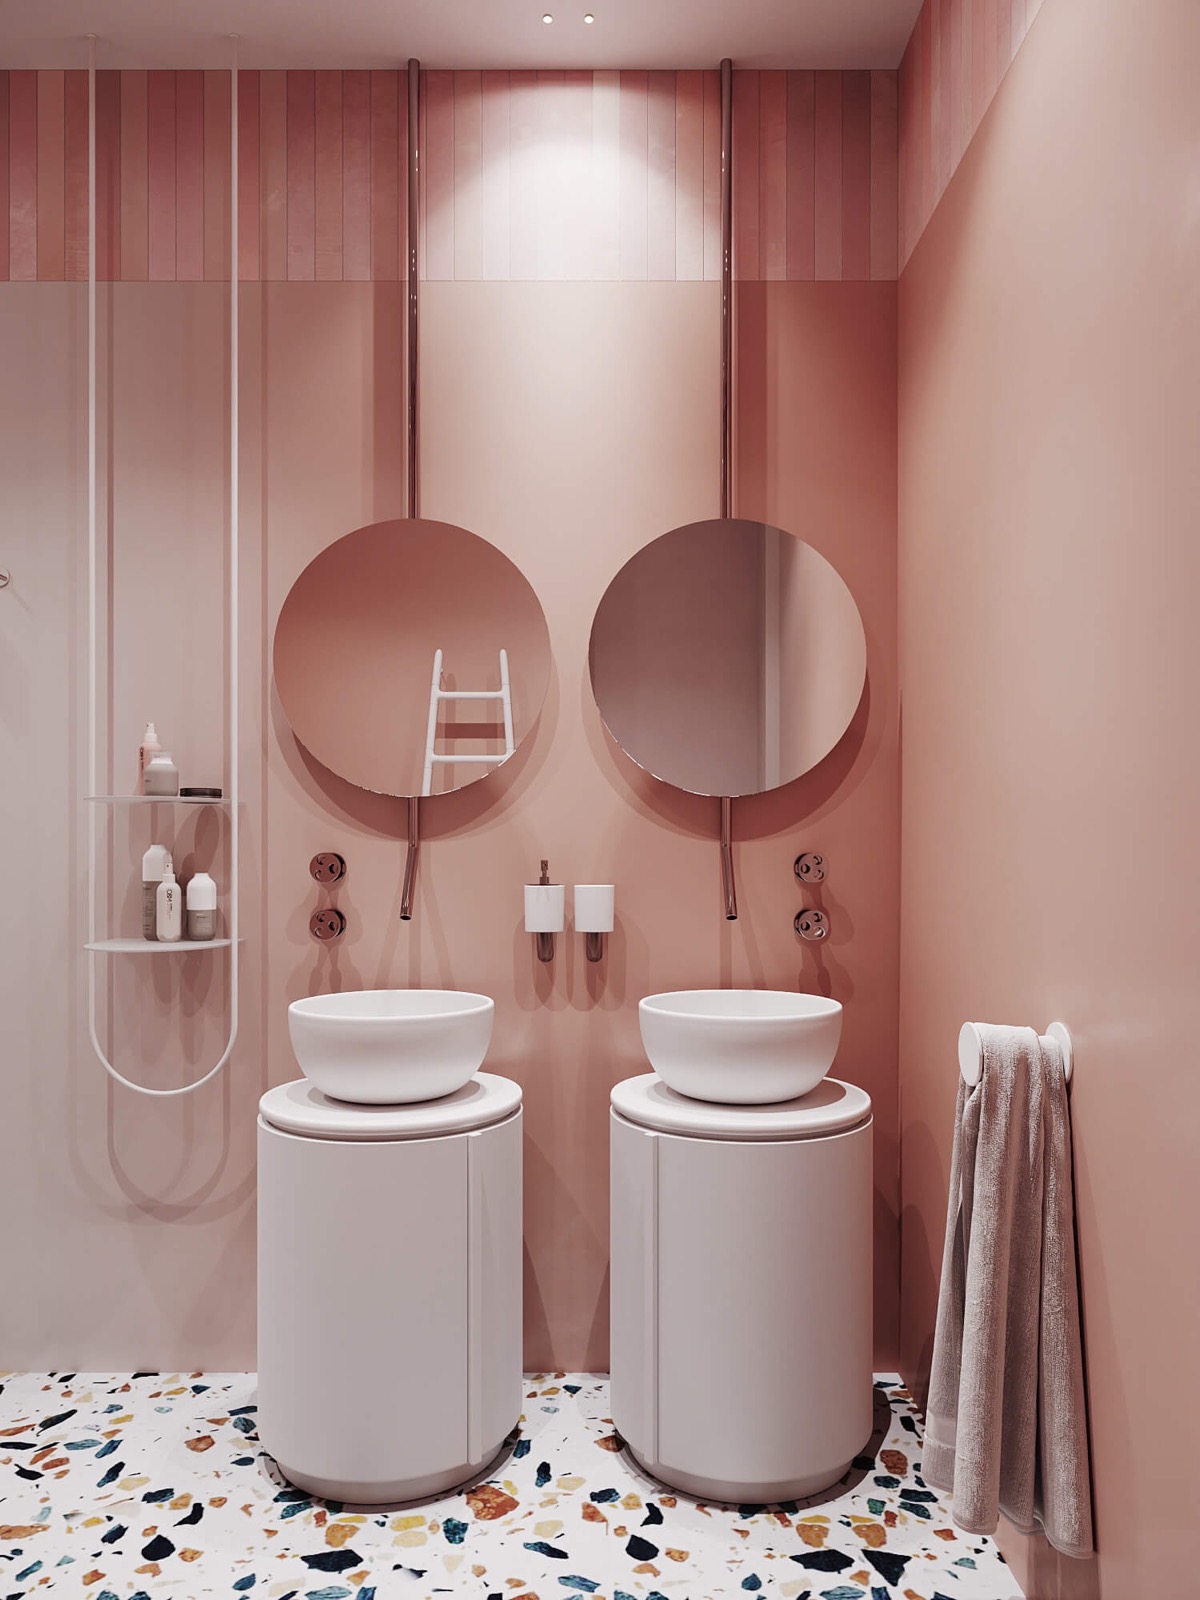 light-pink-bathroom-towels-600x800.jpg